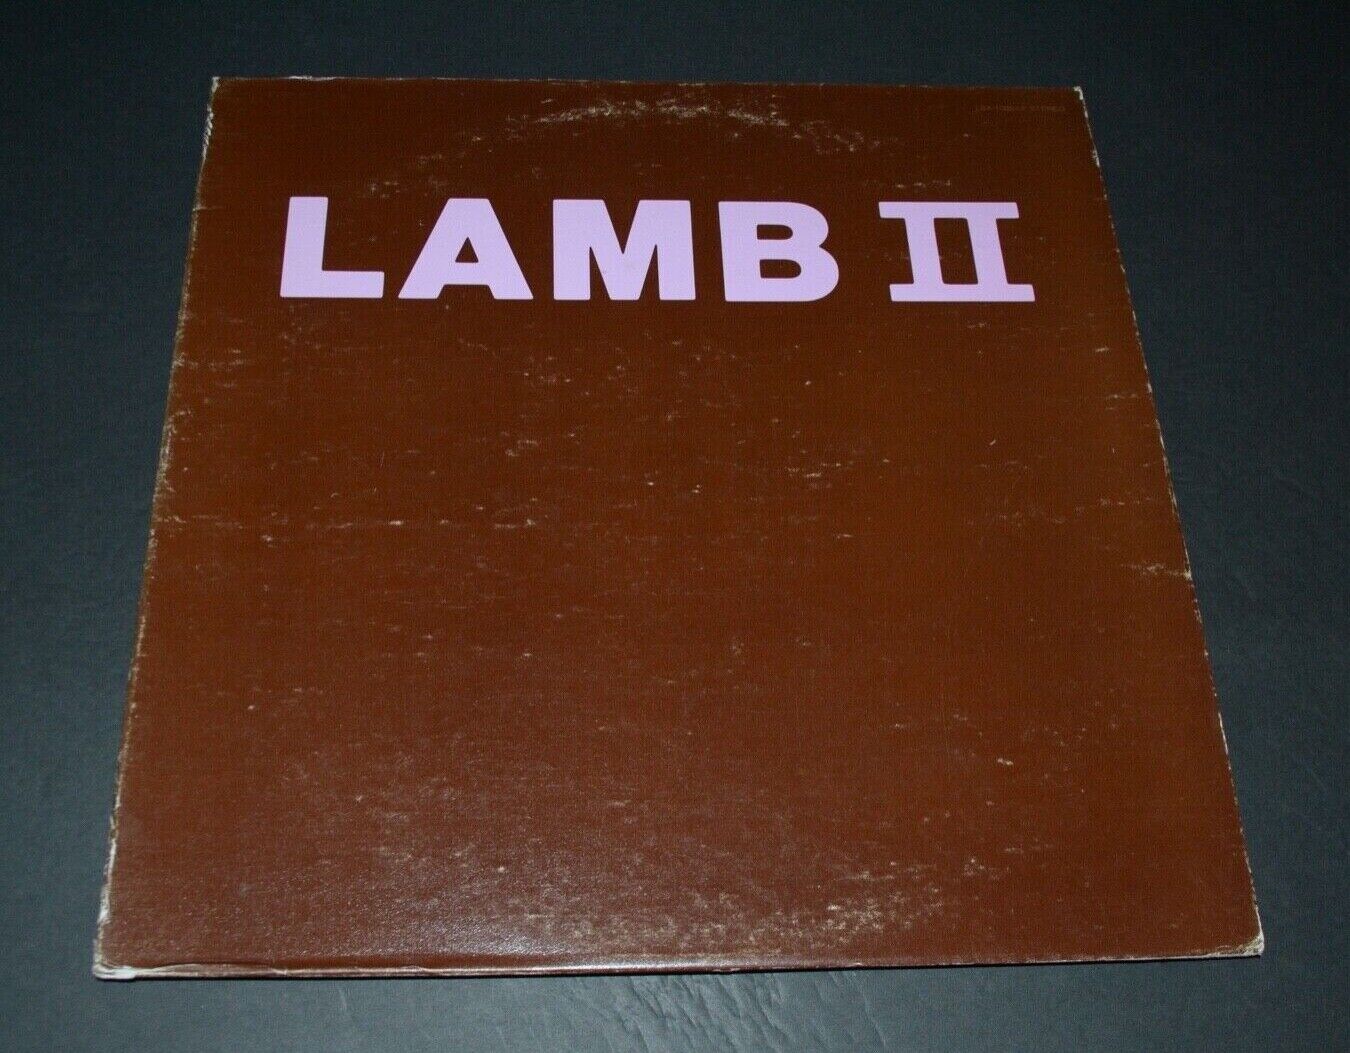 Lamb~Lamb II~With Printed Inner Sleeve~Messianic Jewish Folk Rock~Jesus~Xian